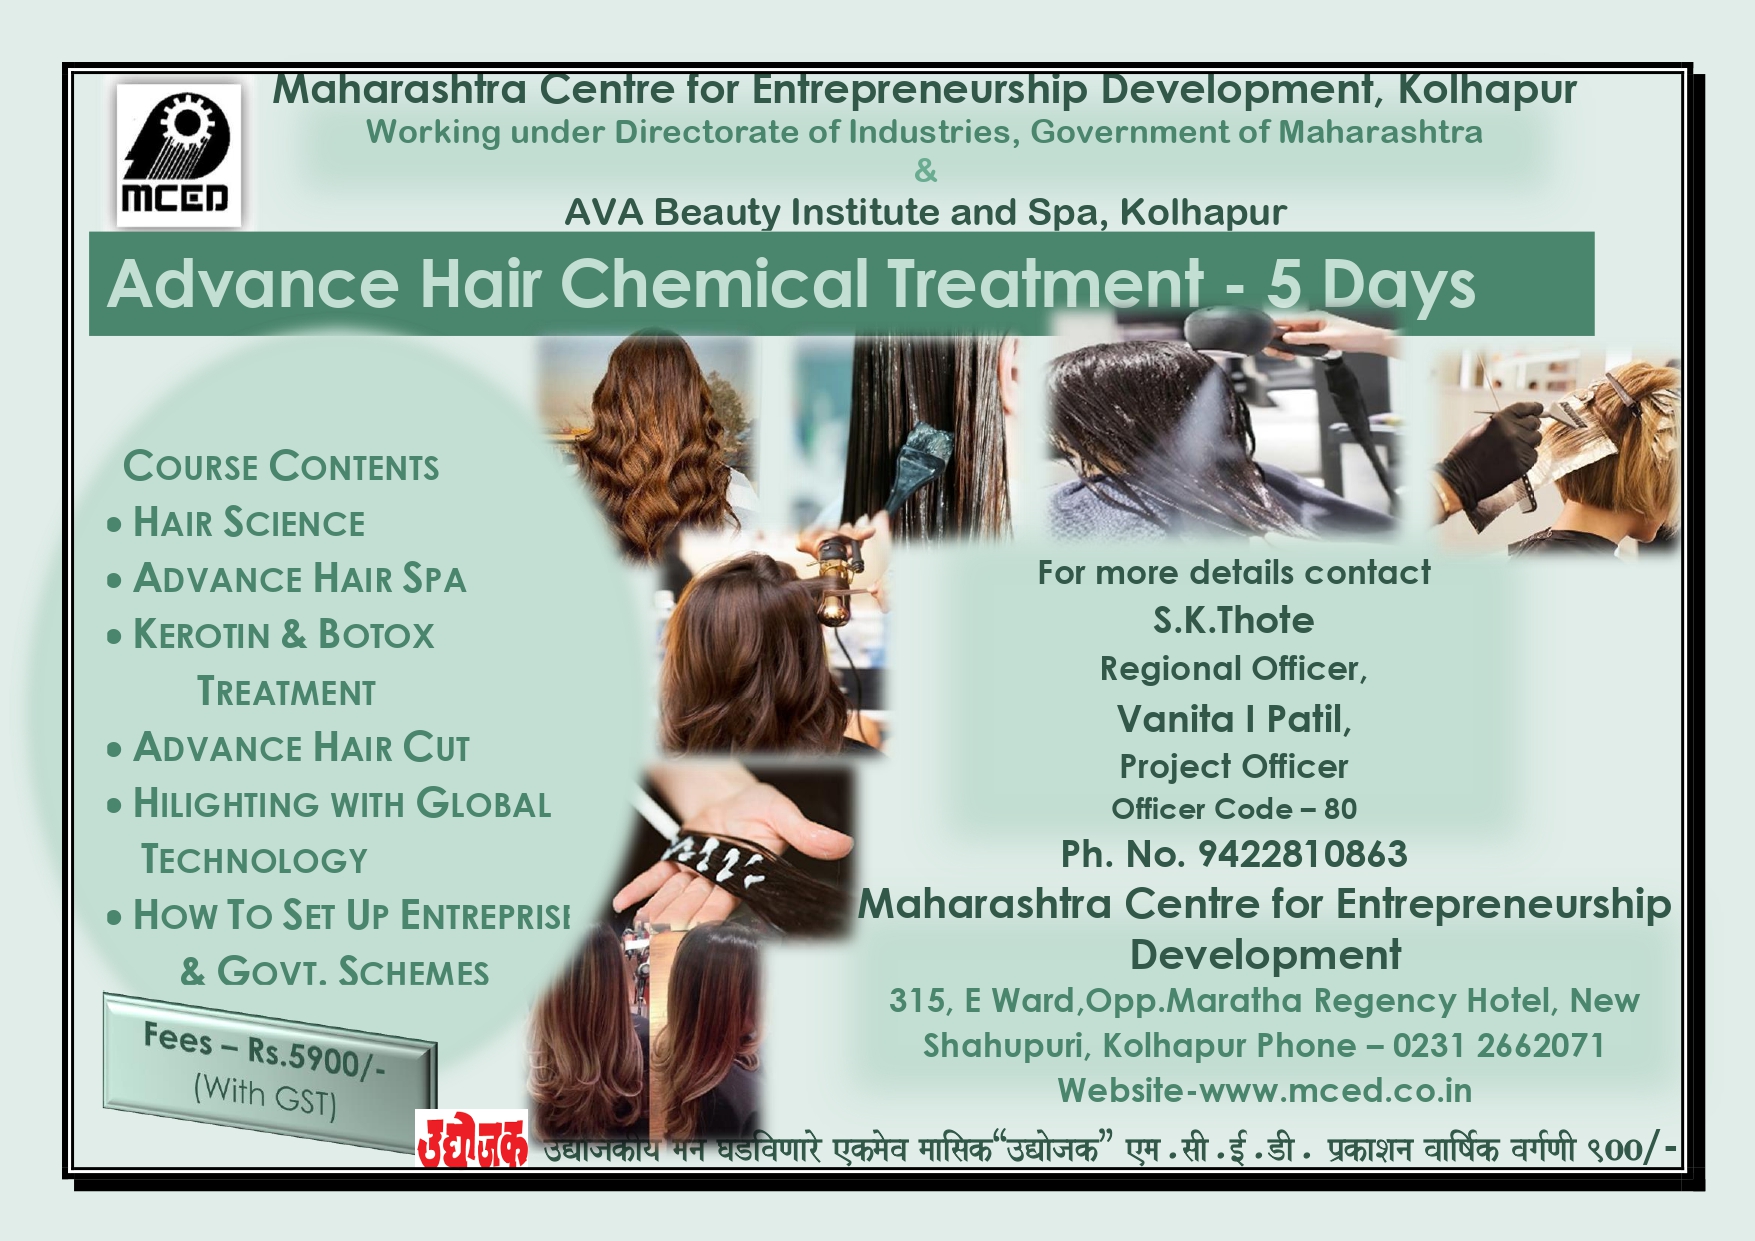 Workshop on Advanced Hair Chemical Treatment